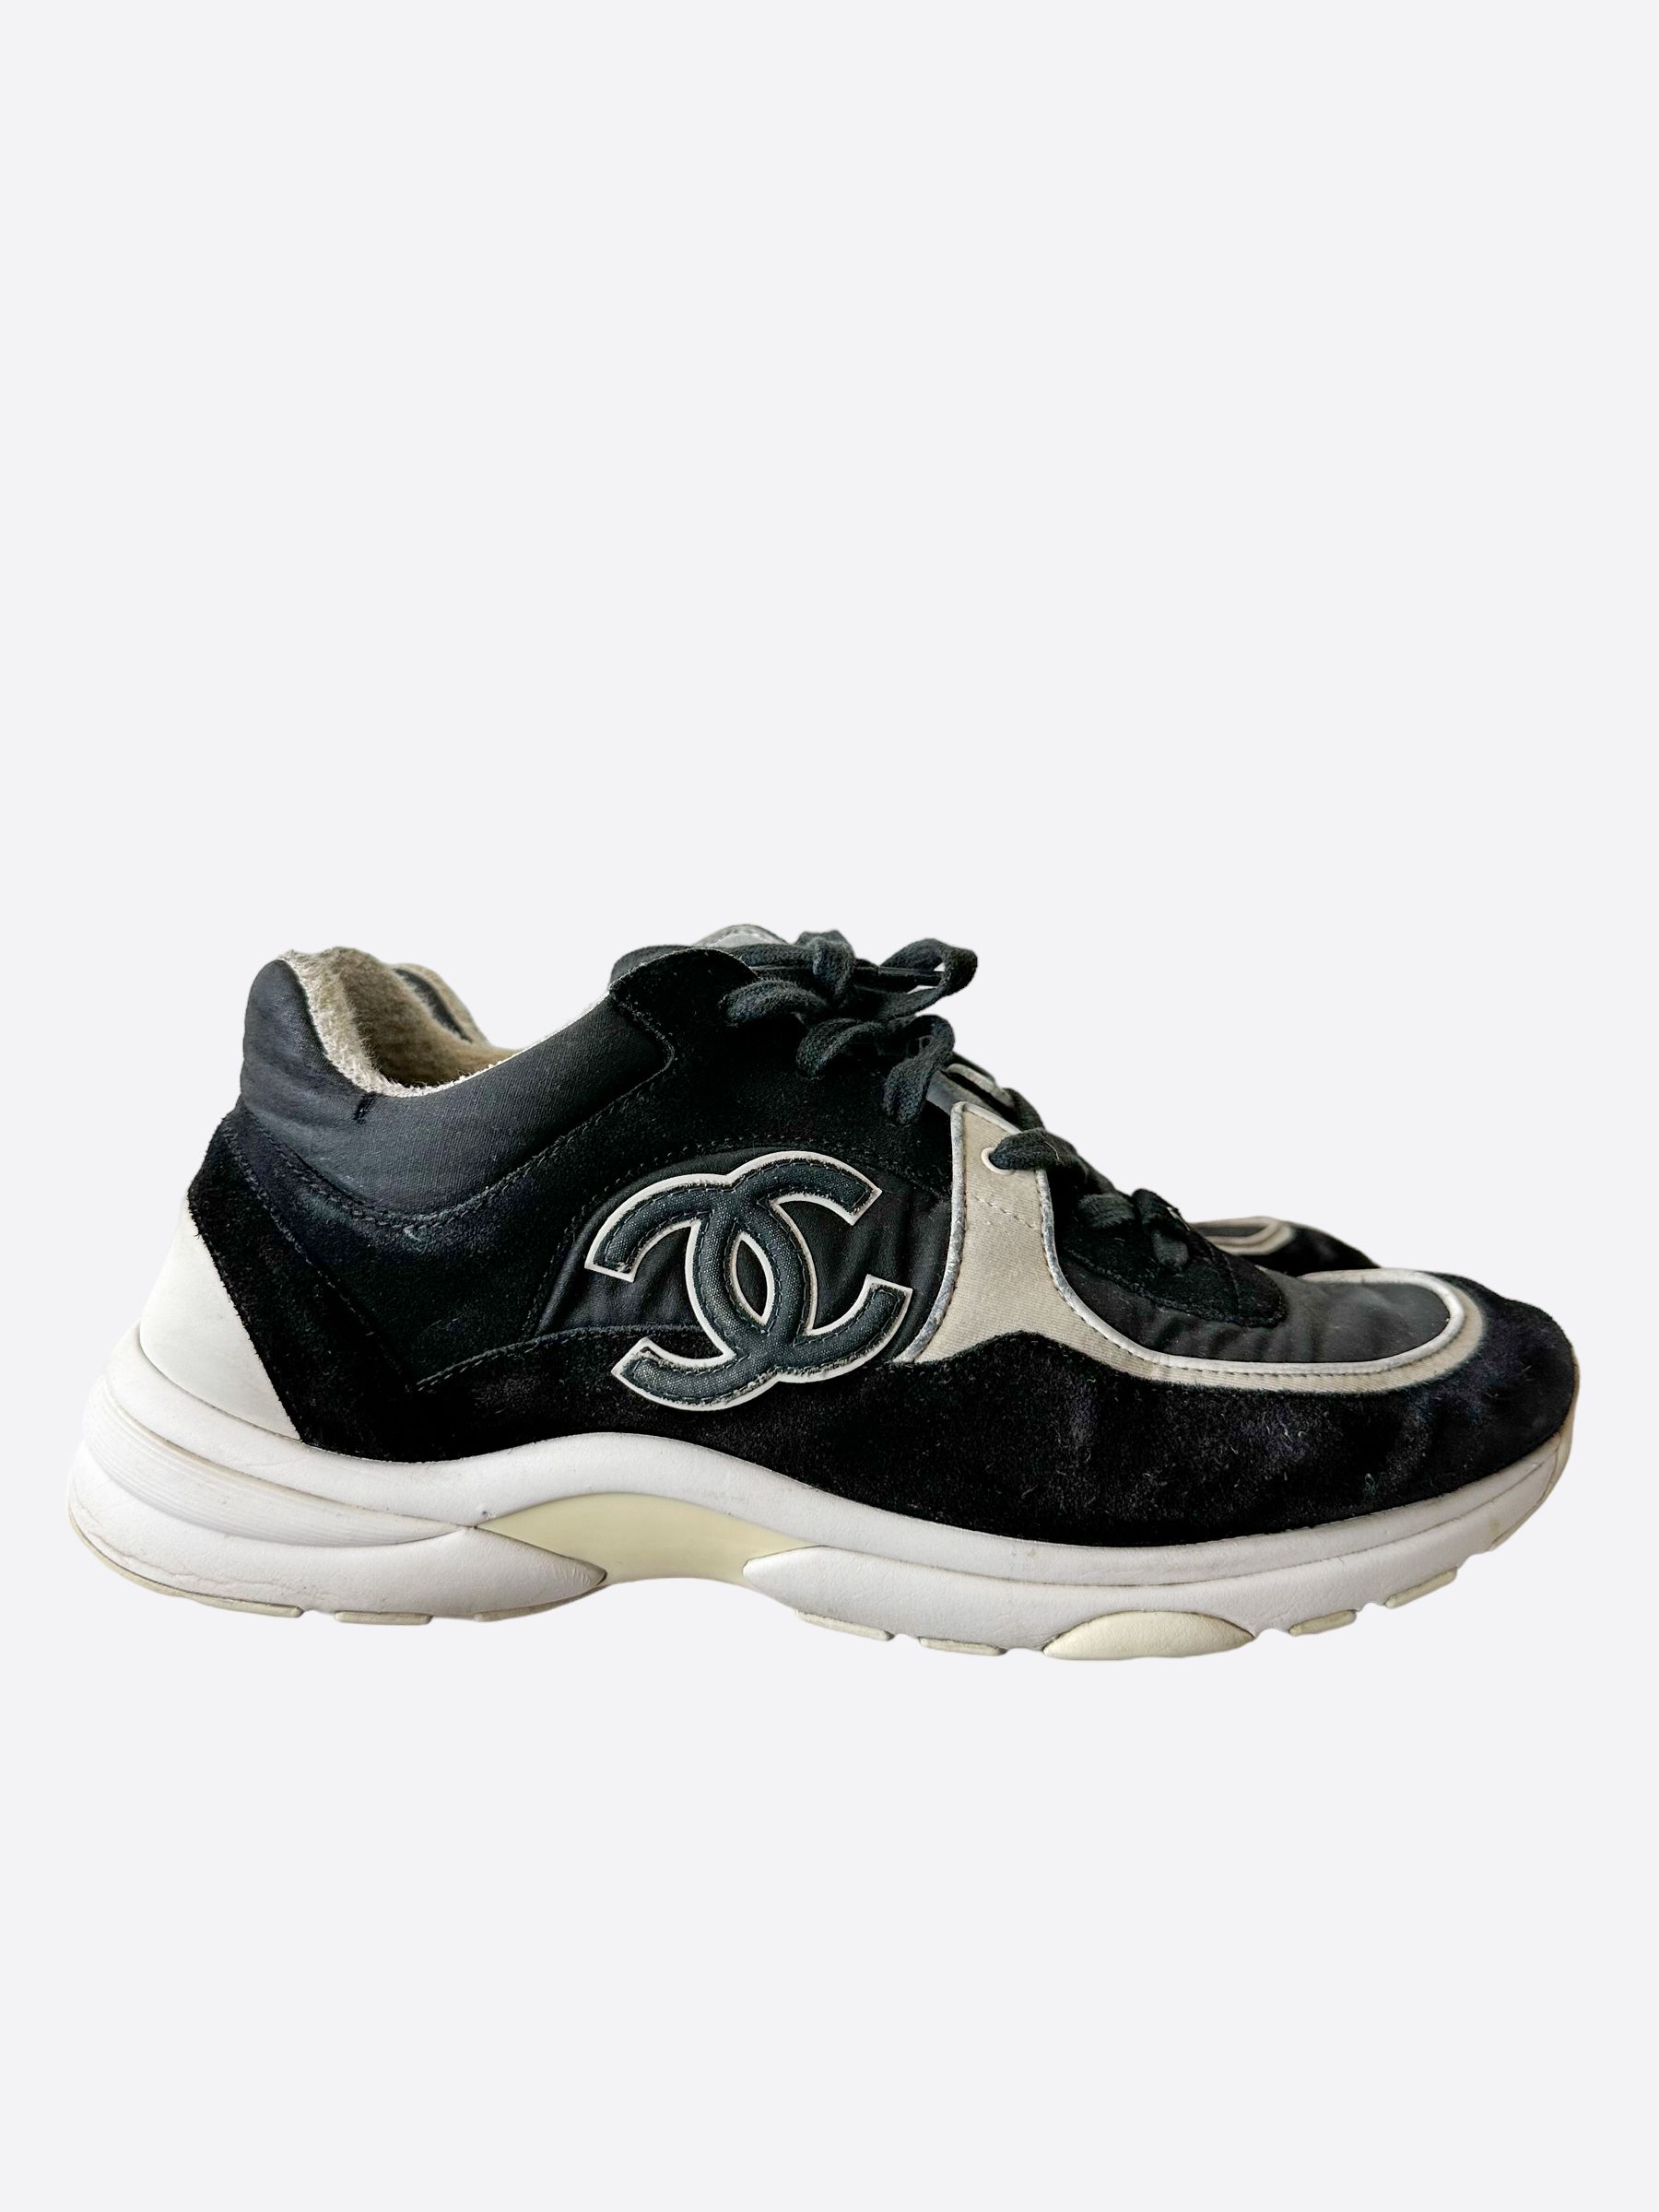 Chanel Chanel Suede Calfskin Nylon Ecru Gray Sneaker Size 6.5(39.5)